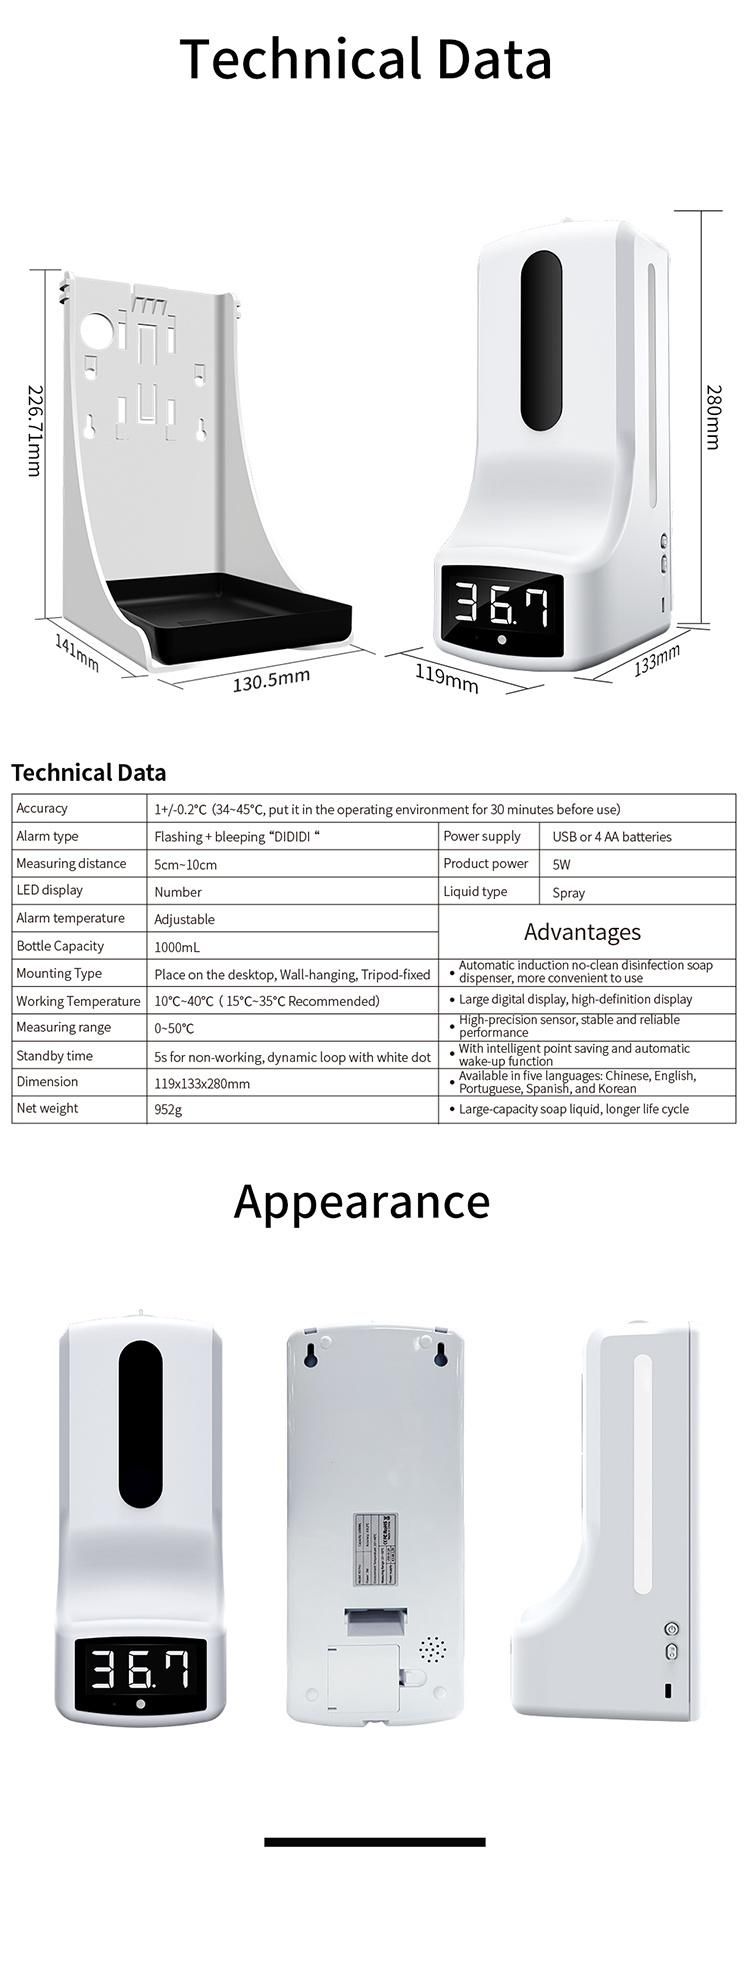 Saige 1000ml K9PRO Thermometer Plastic Automatic Soap Dispenser